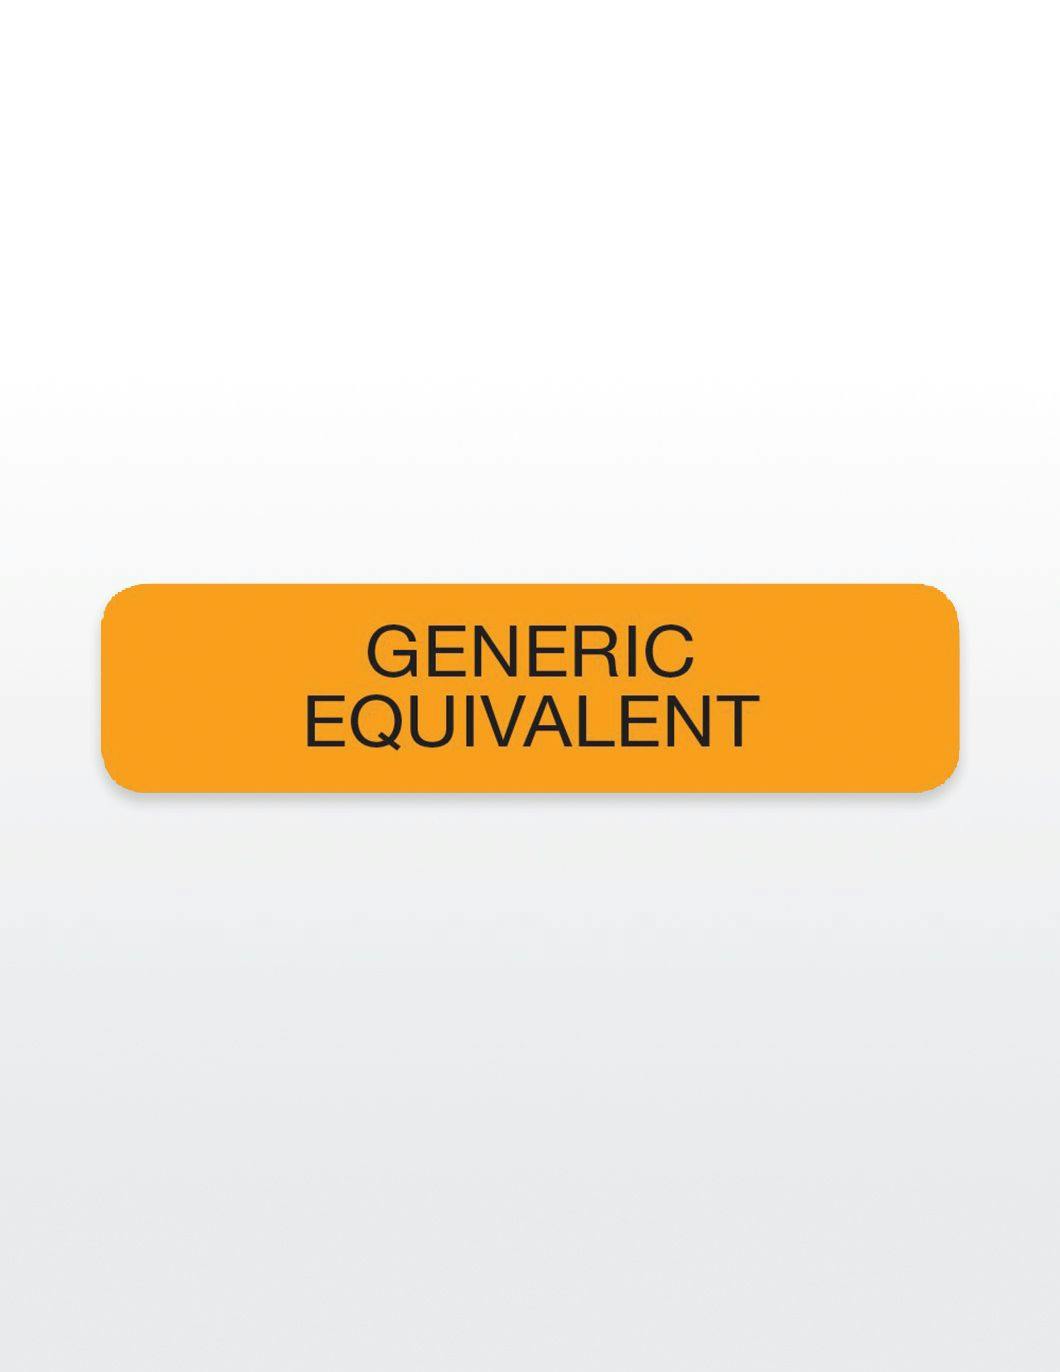 generic-eqivalent-med-stickers